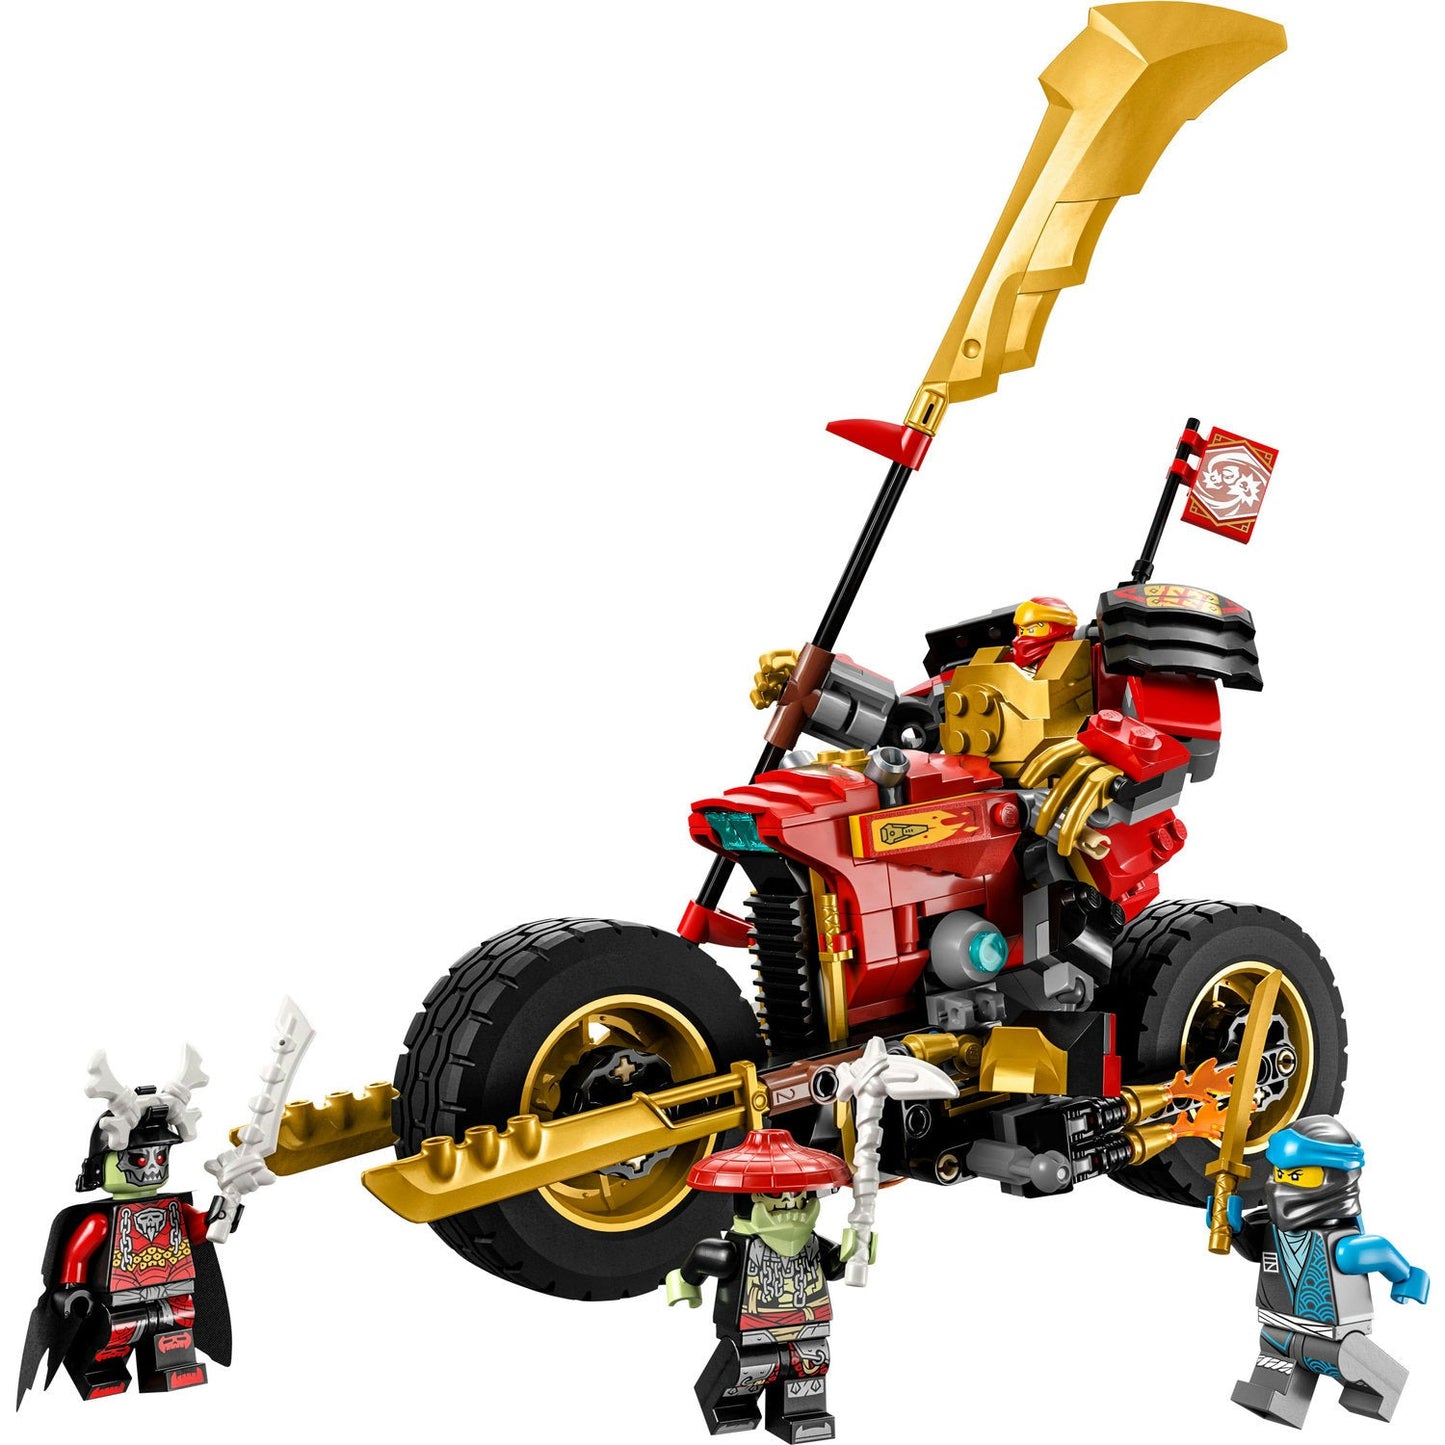 Lego Ninjago Kai's Mech Rider EVO